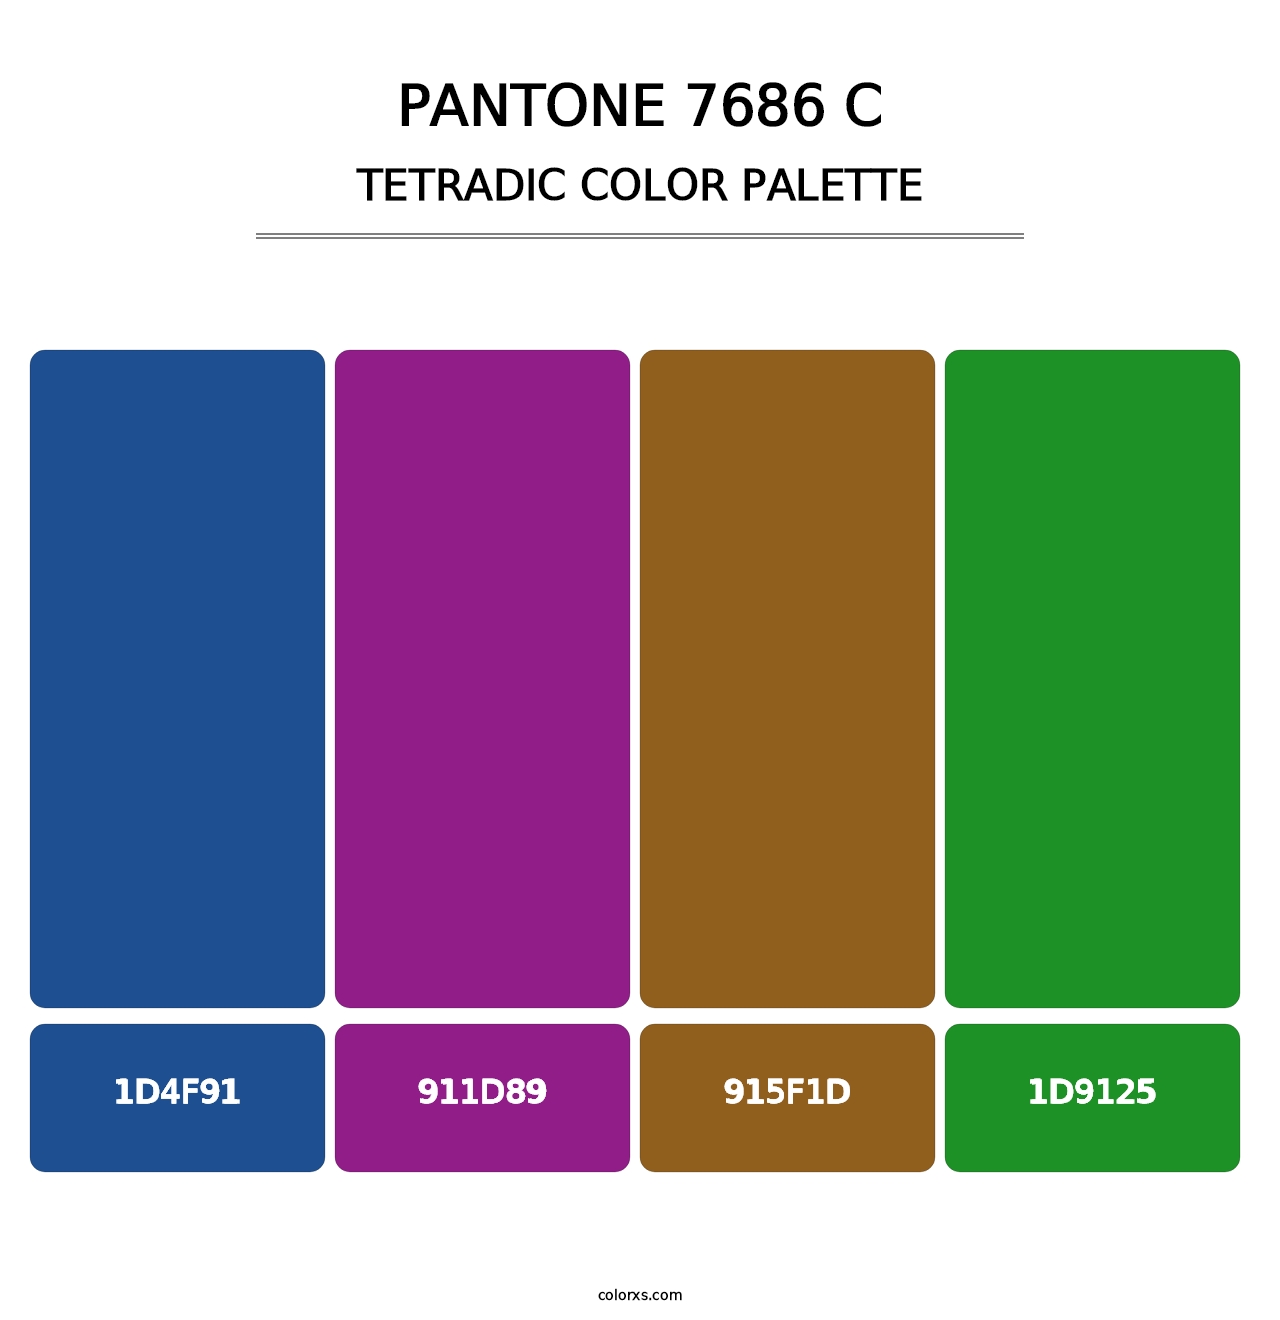 PANTONE 7686 C - Tetradic Color Palette